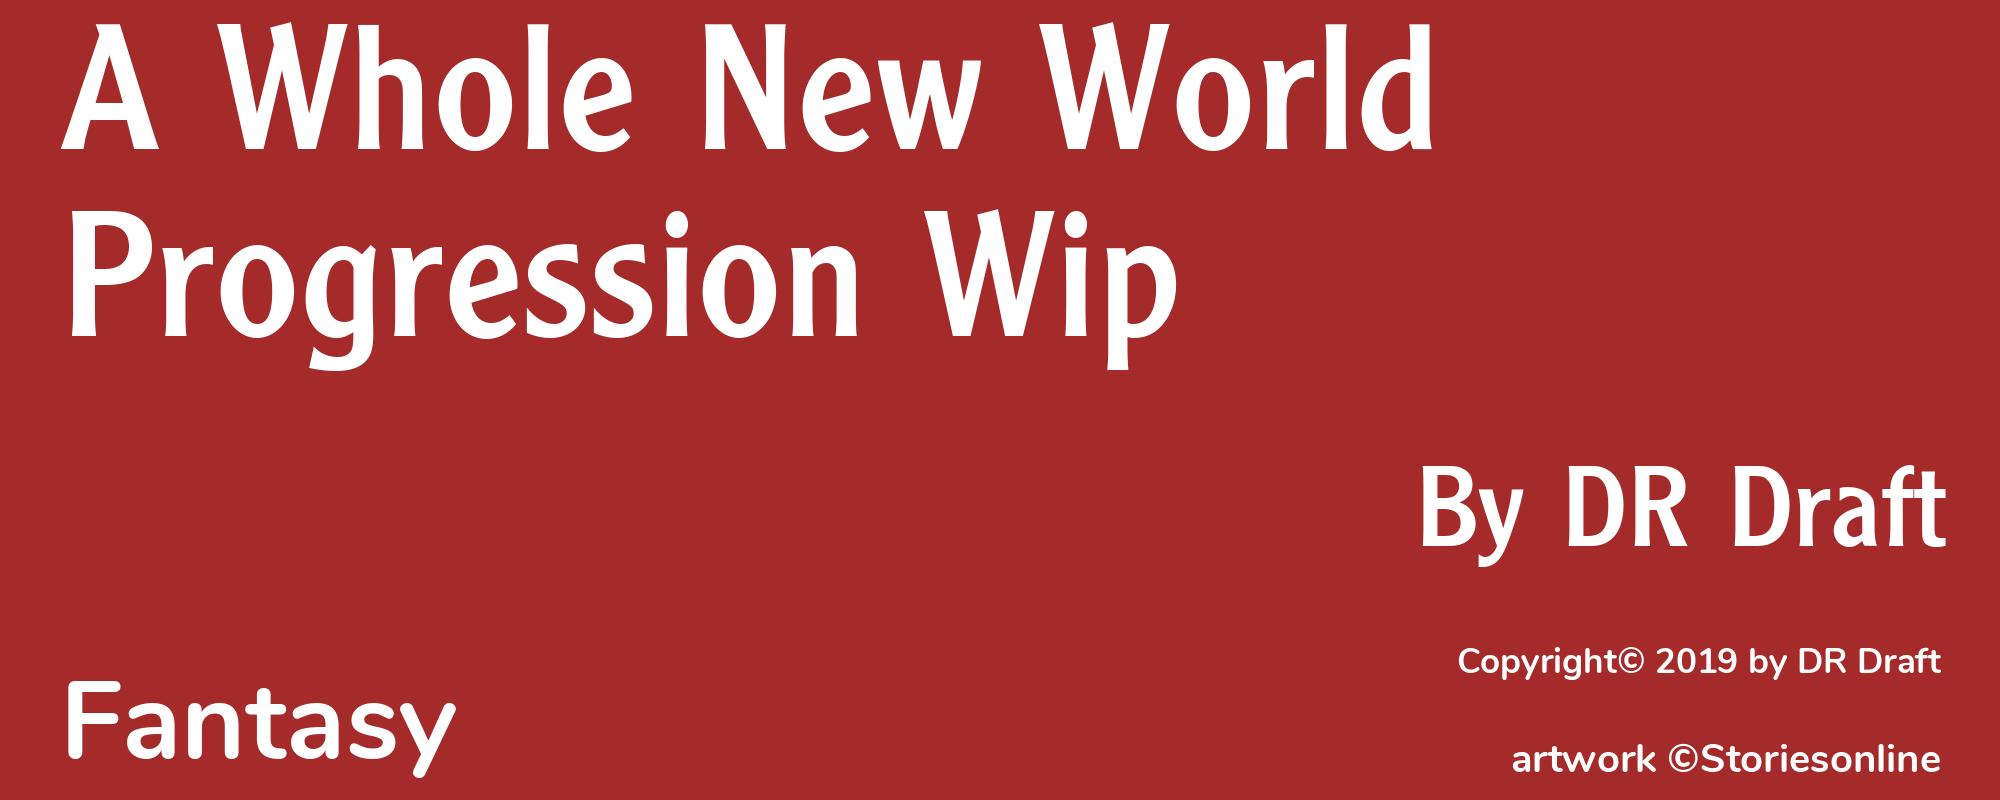 A Whole New World Progression Wip - Cover